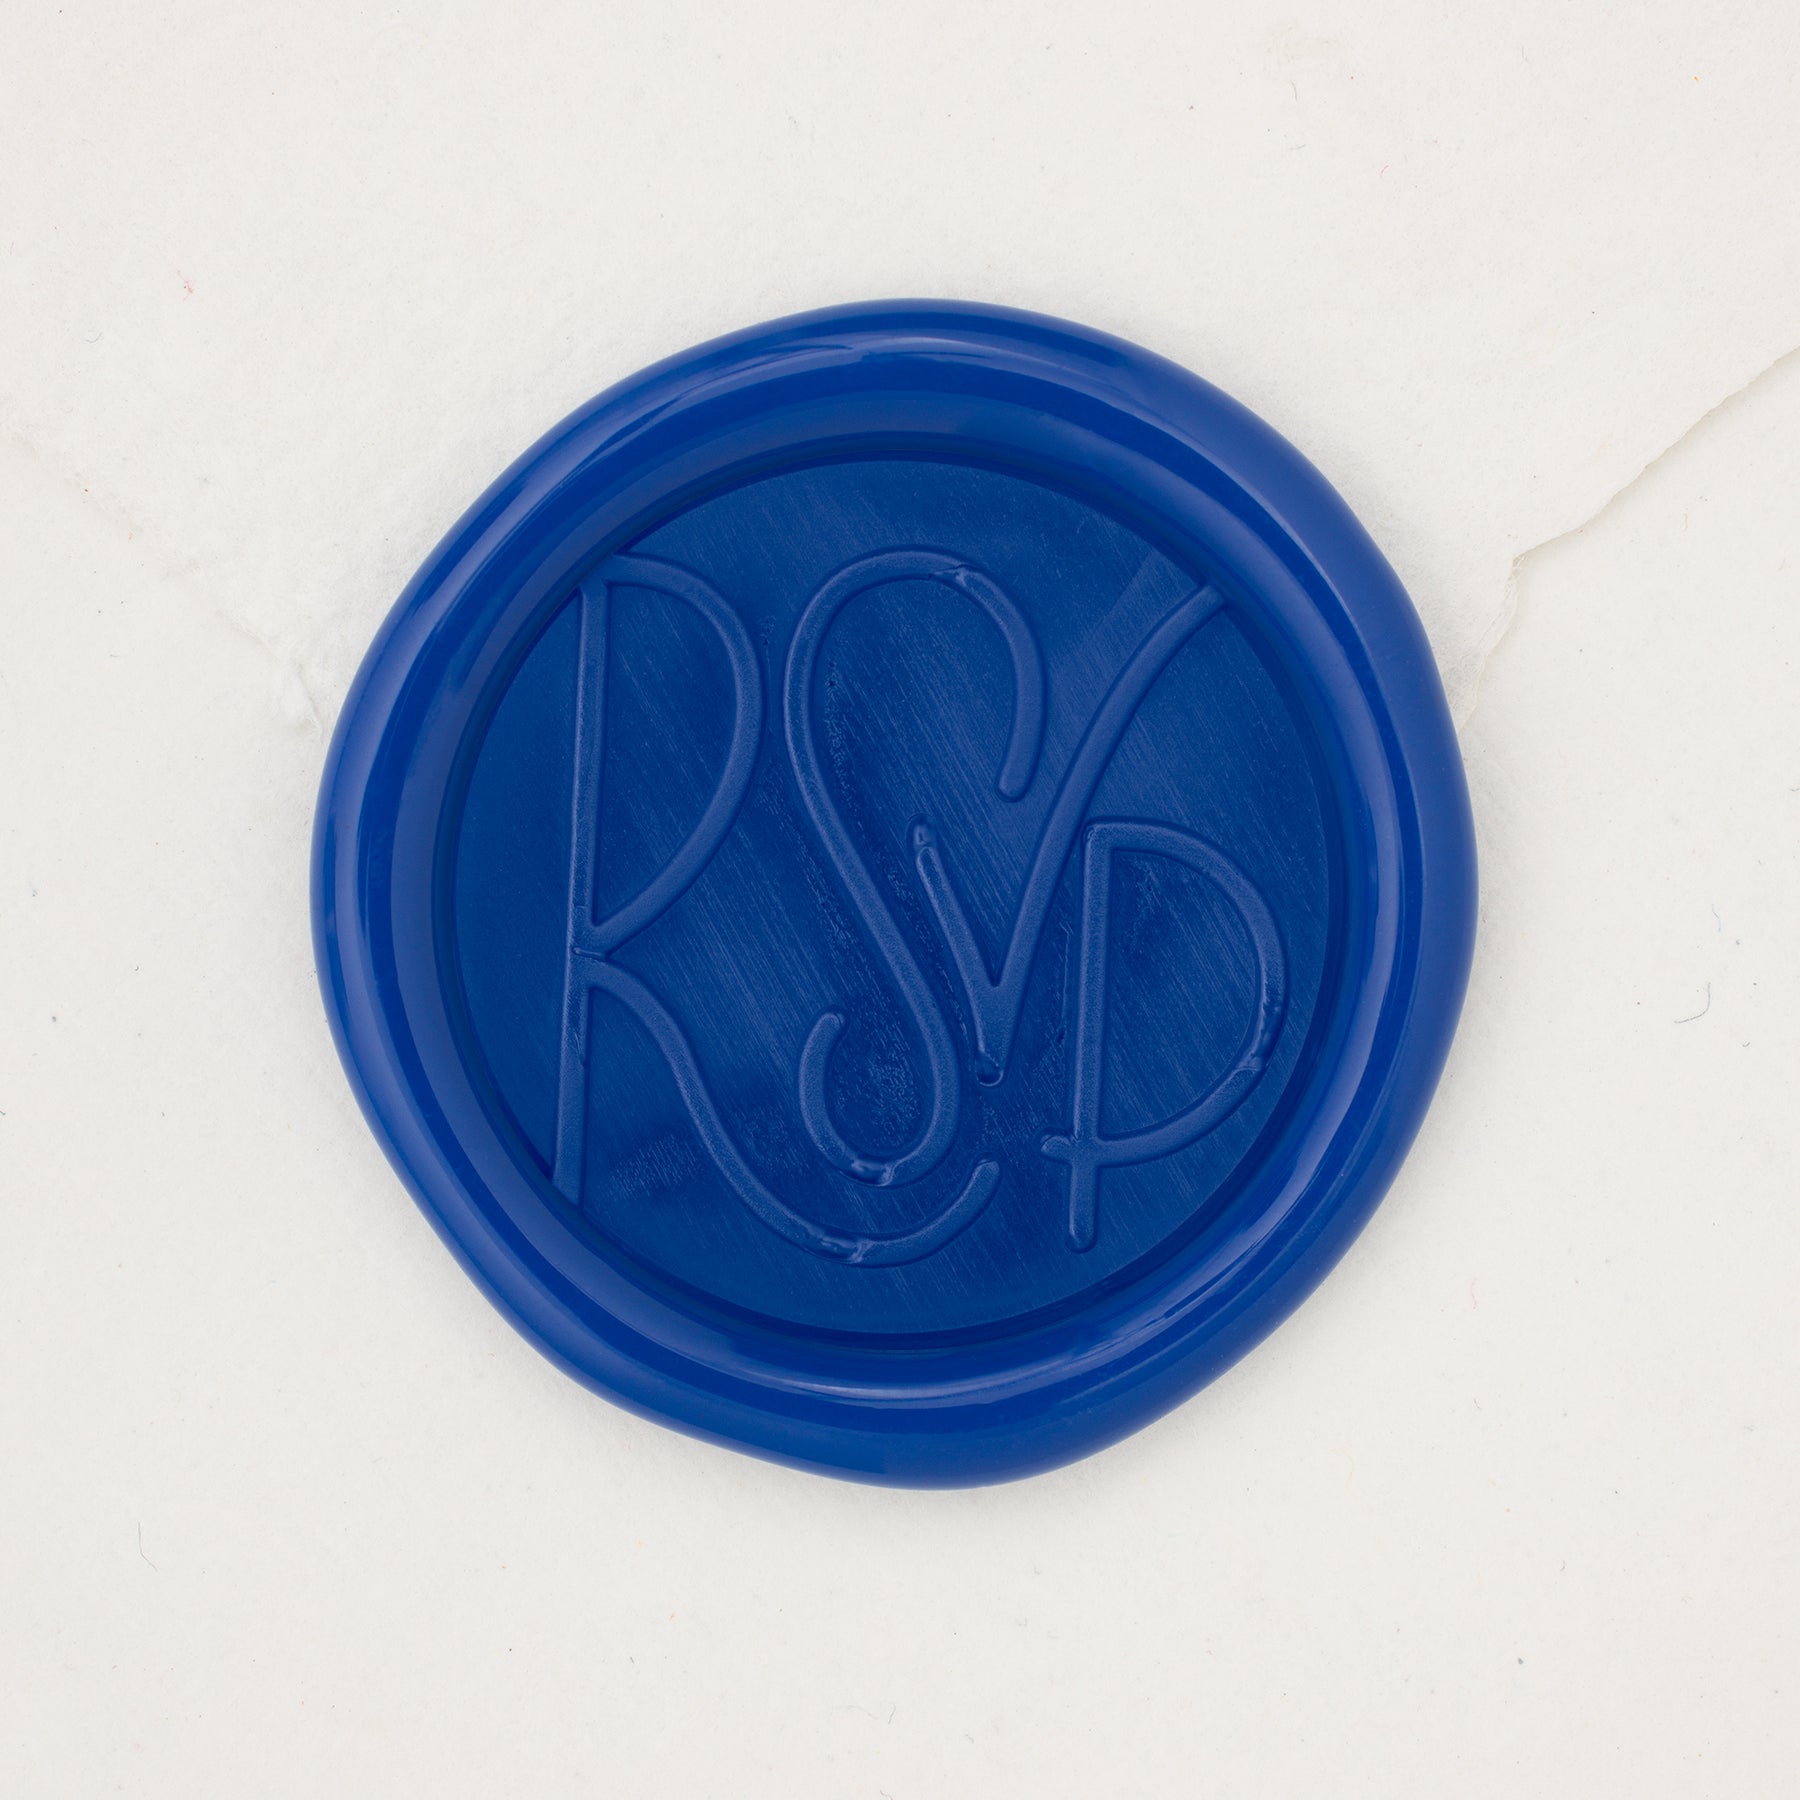 RSVP Wax Seals